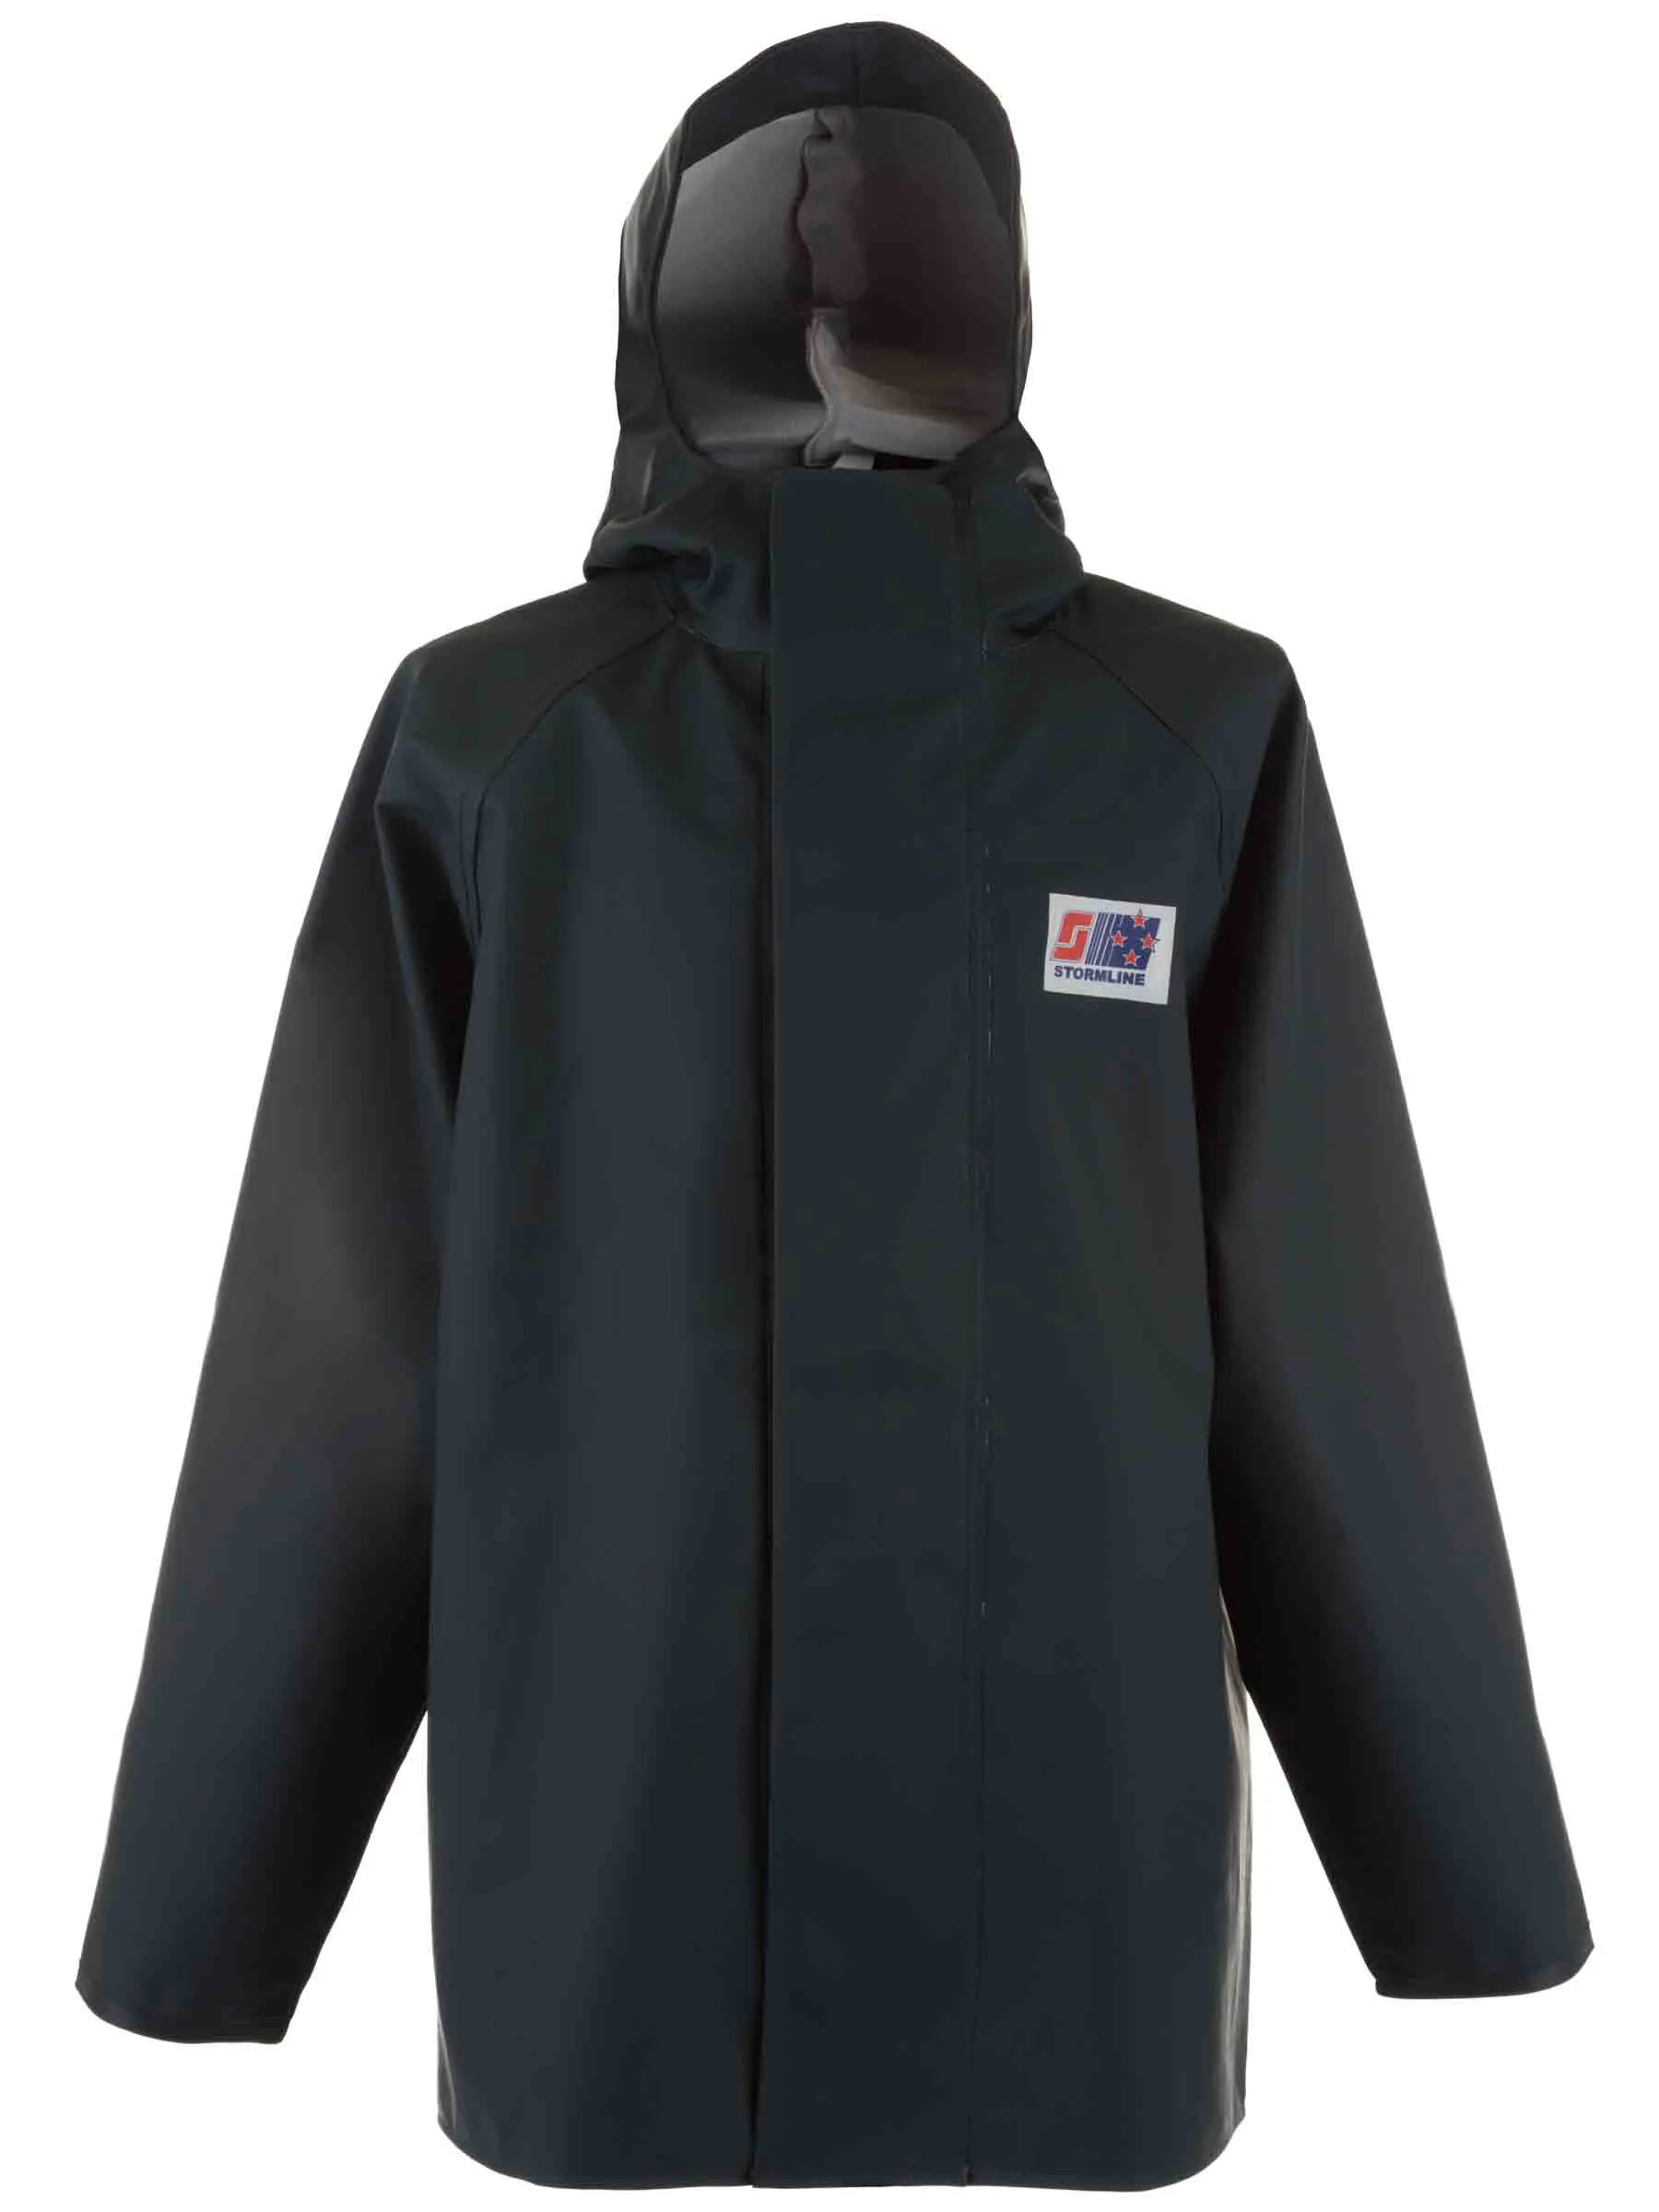 Stormtex 248g Midweight PVC Commercial Rain Gear Jacket - Green (Size: XL)